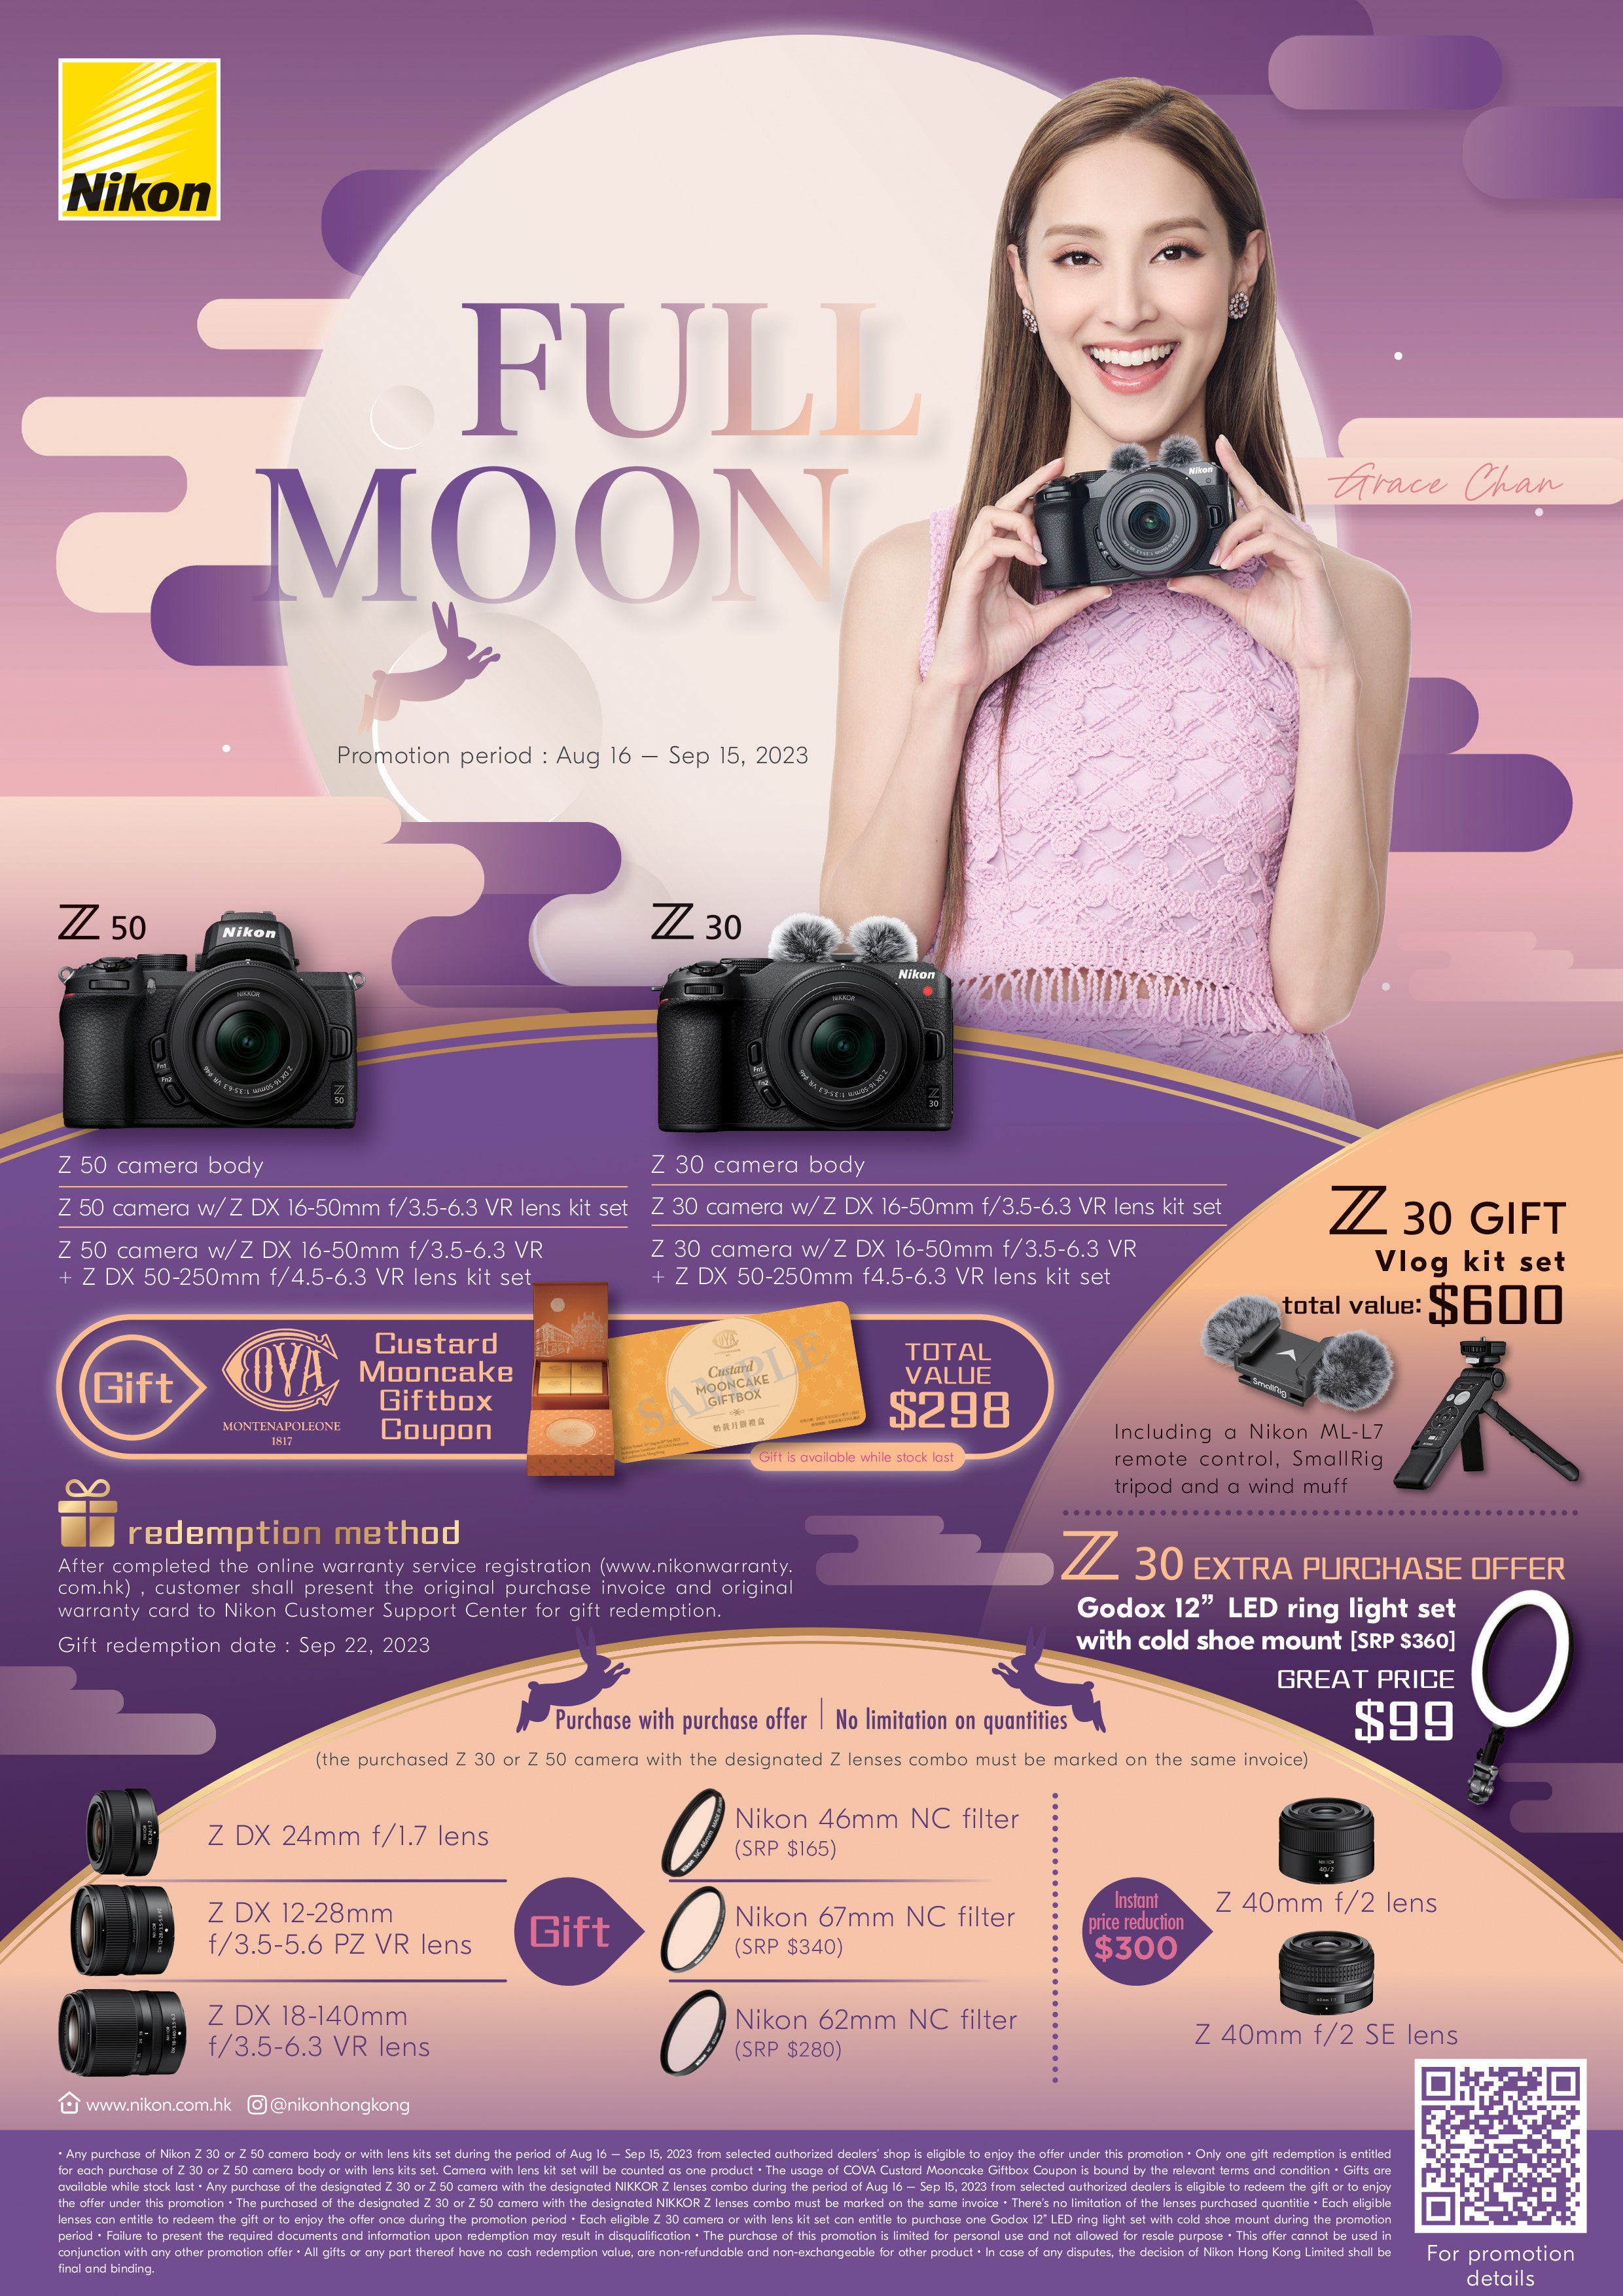 Nikon Z 30 & Z fc Spring & Travel Promotion, February 2023 | Nikon Cameras, Lenses & Accessories